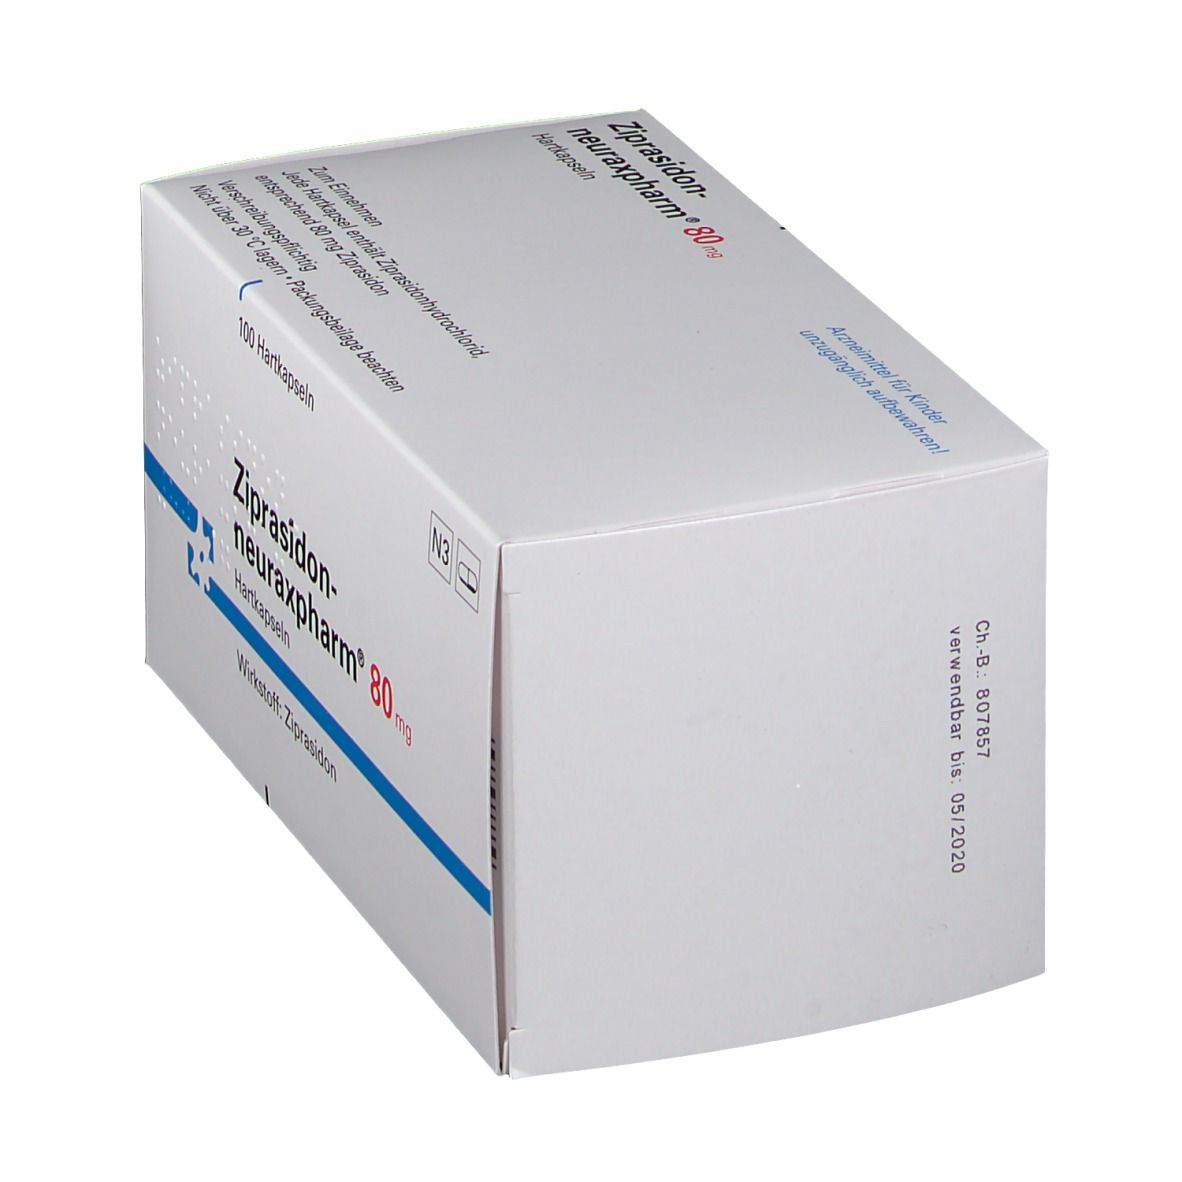 Ziprasidon-neuraxpharm® 80 mg